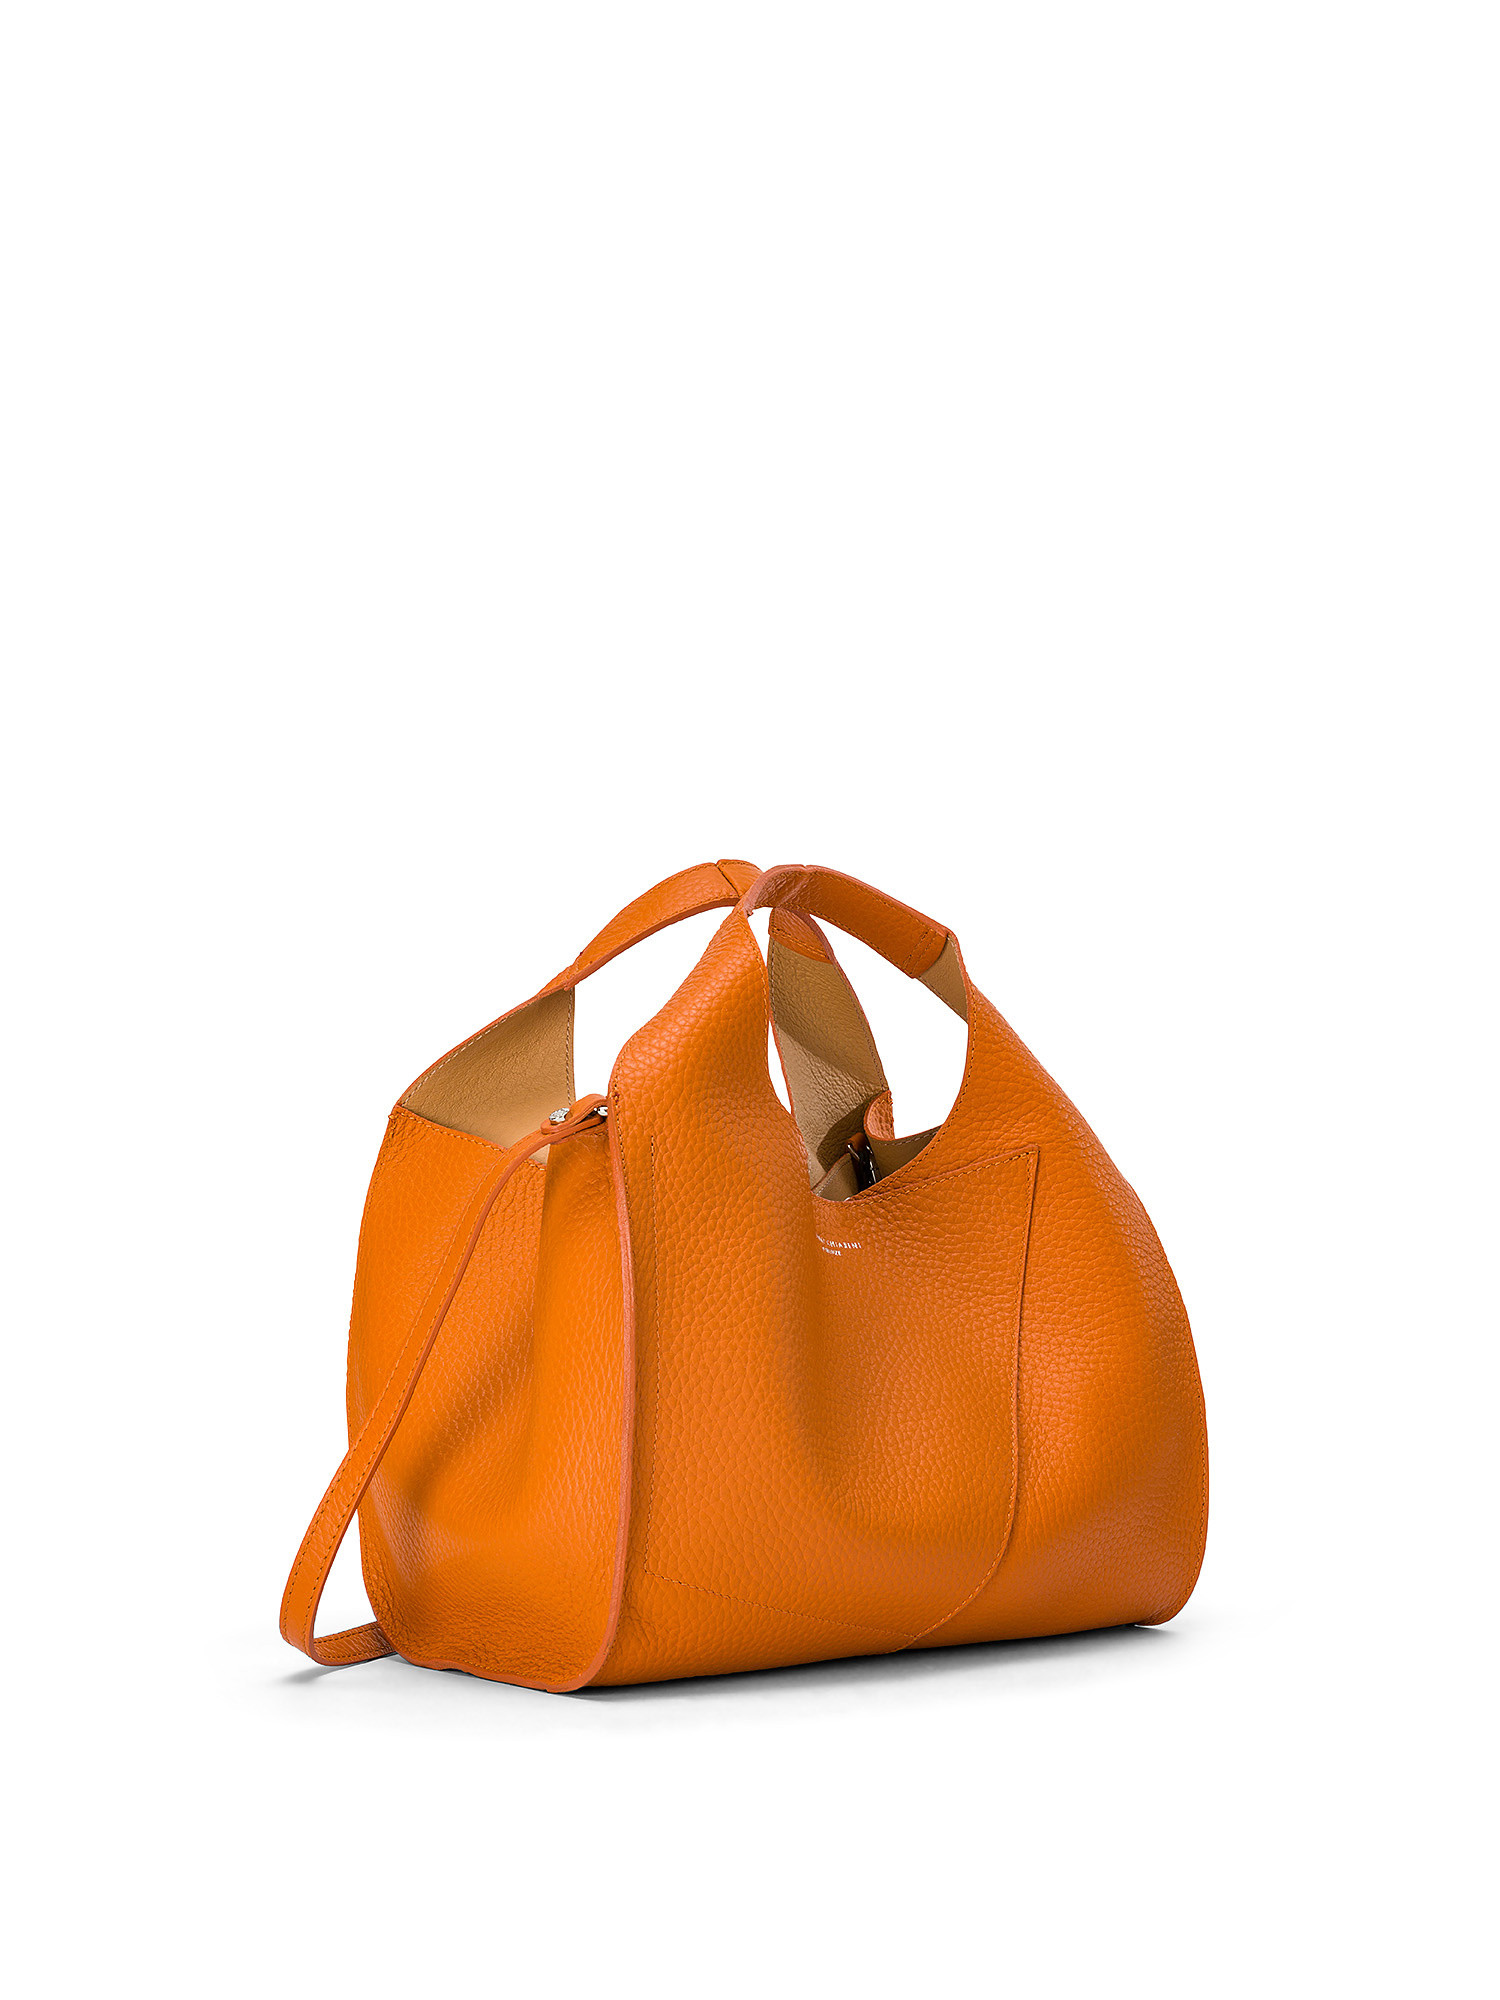 Gianni Chiarini - Euphoria bag in leather, Brown, large image number 1